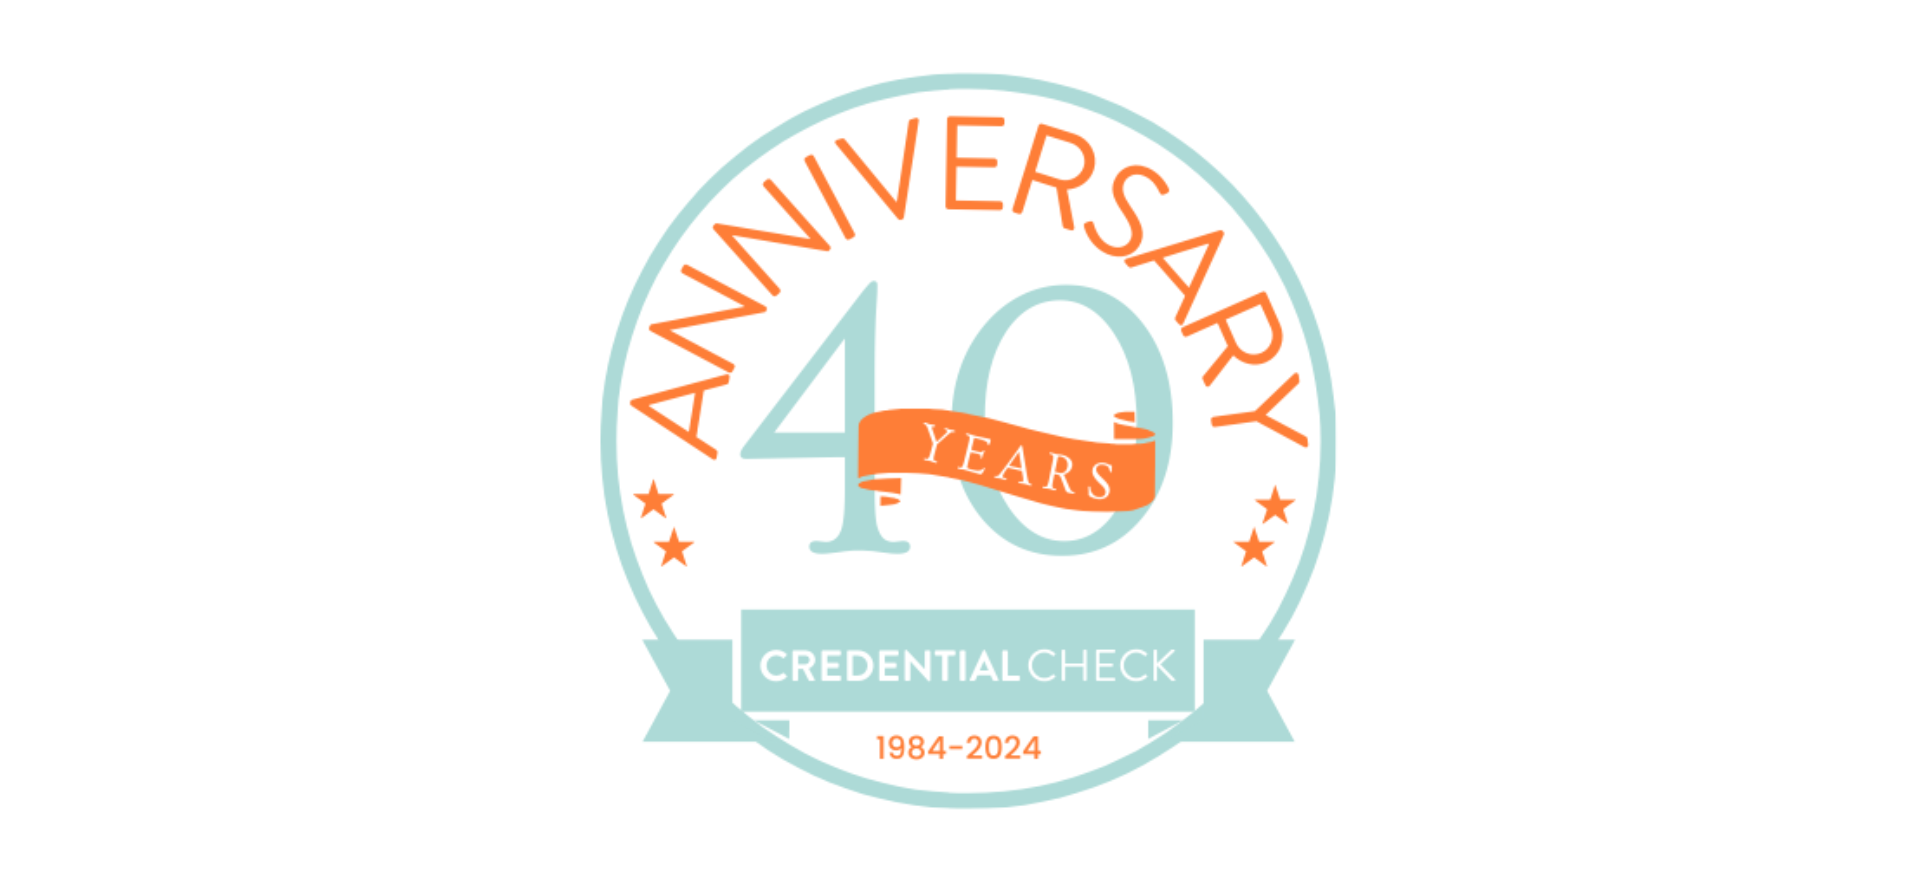 Happy 40th Anniversary to CredentialCheck!